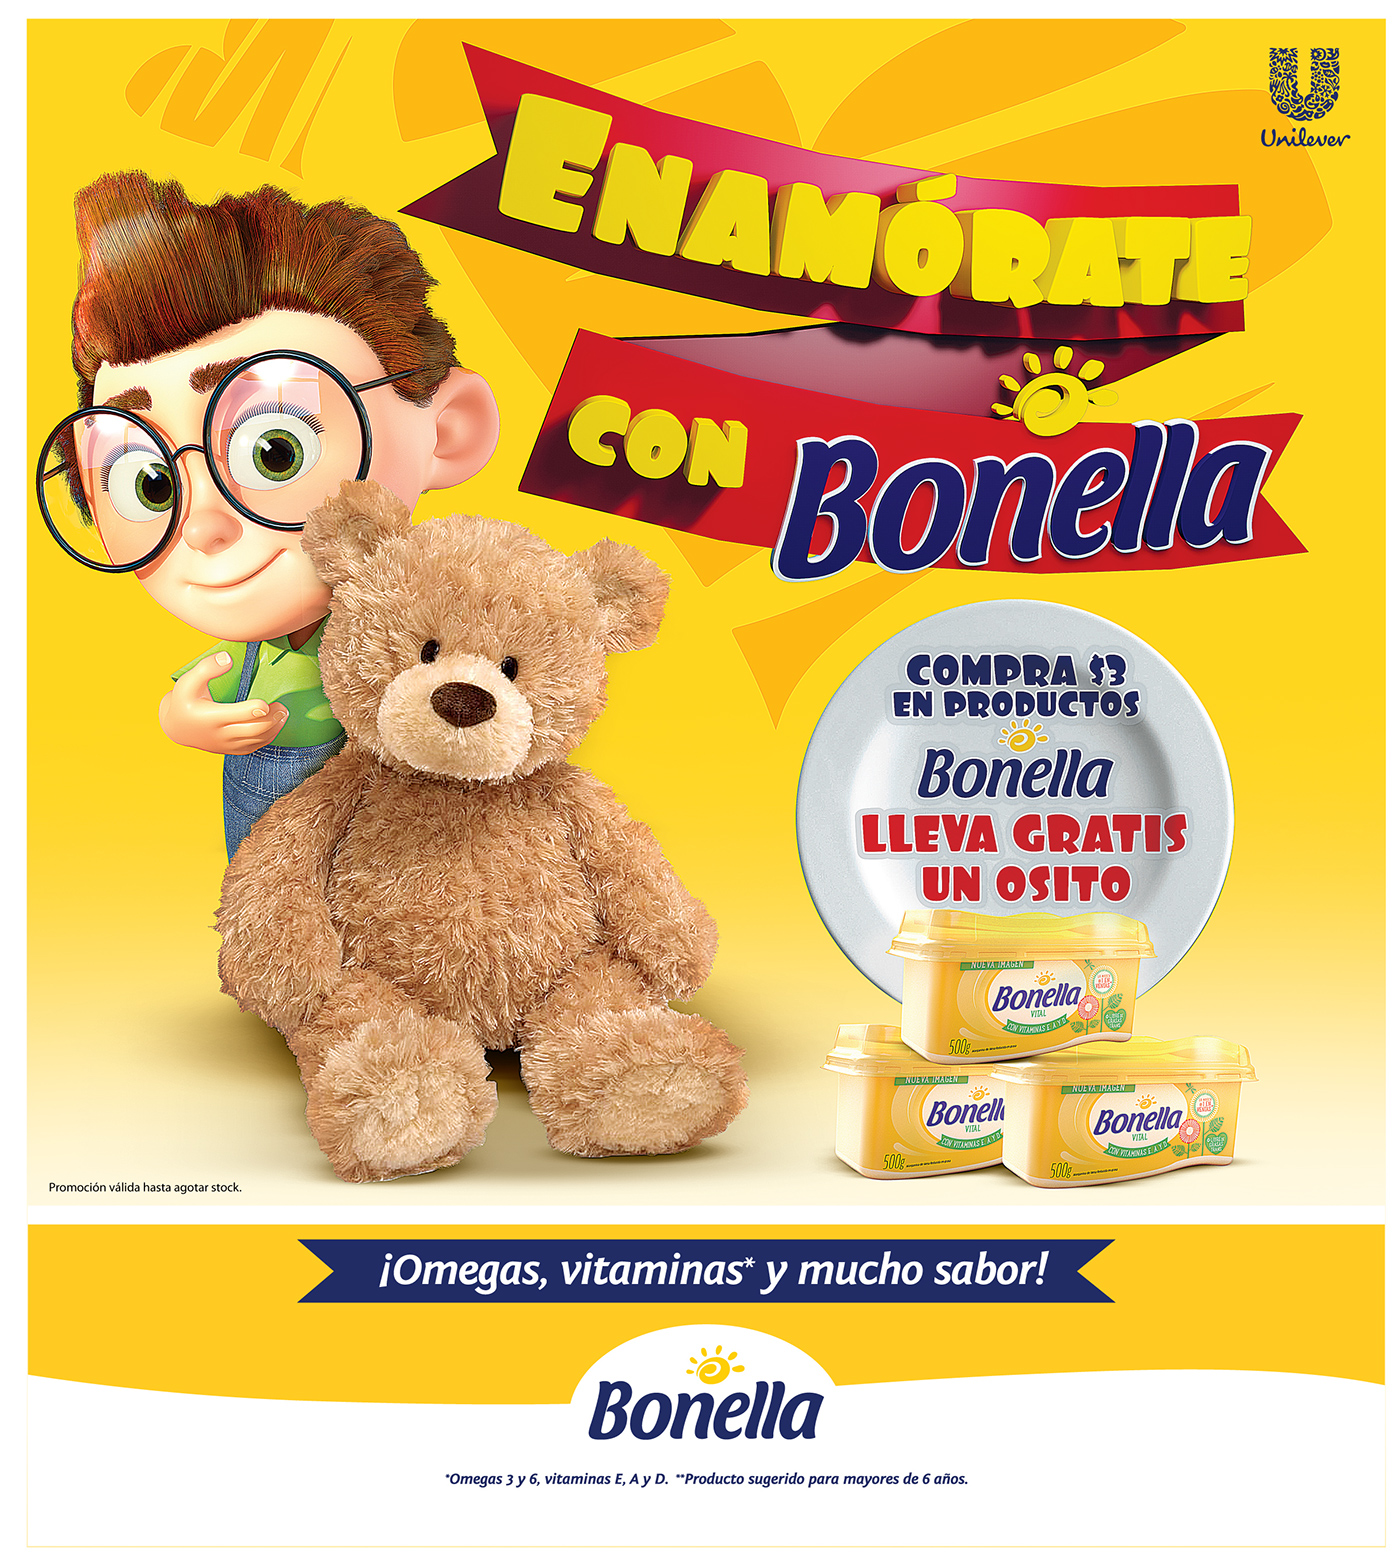 Ecuador bonella Unilever guayaquil ronk